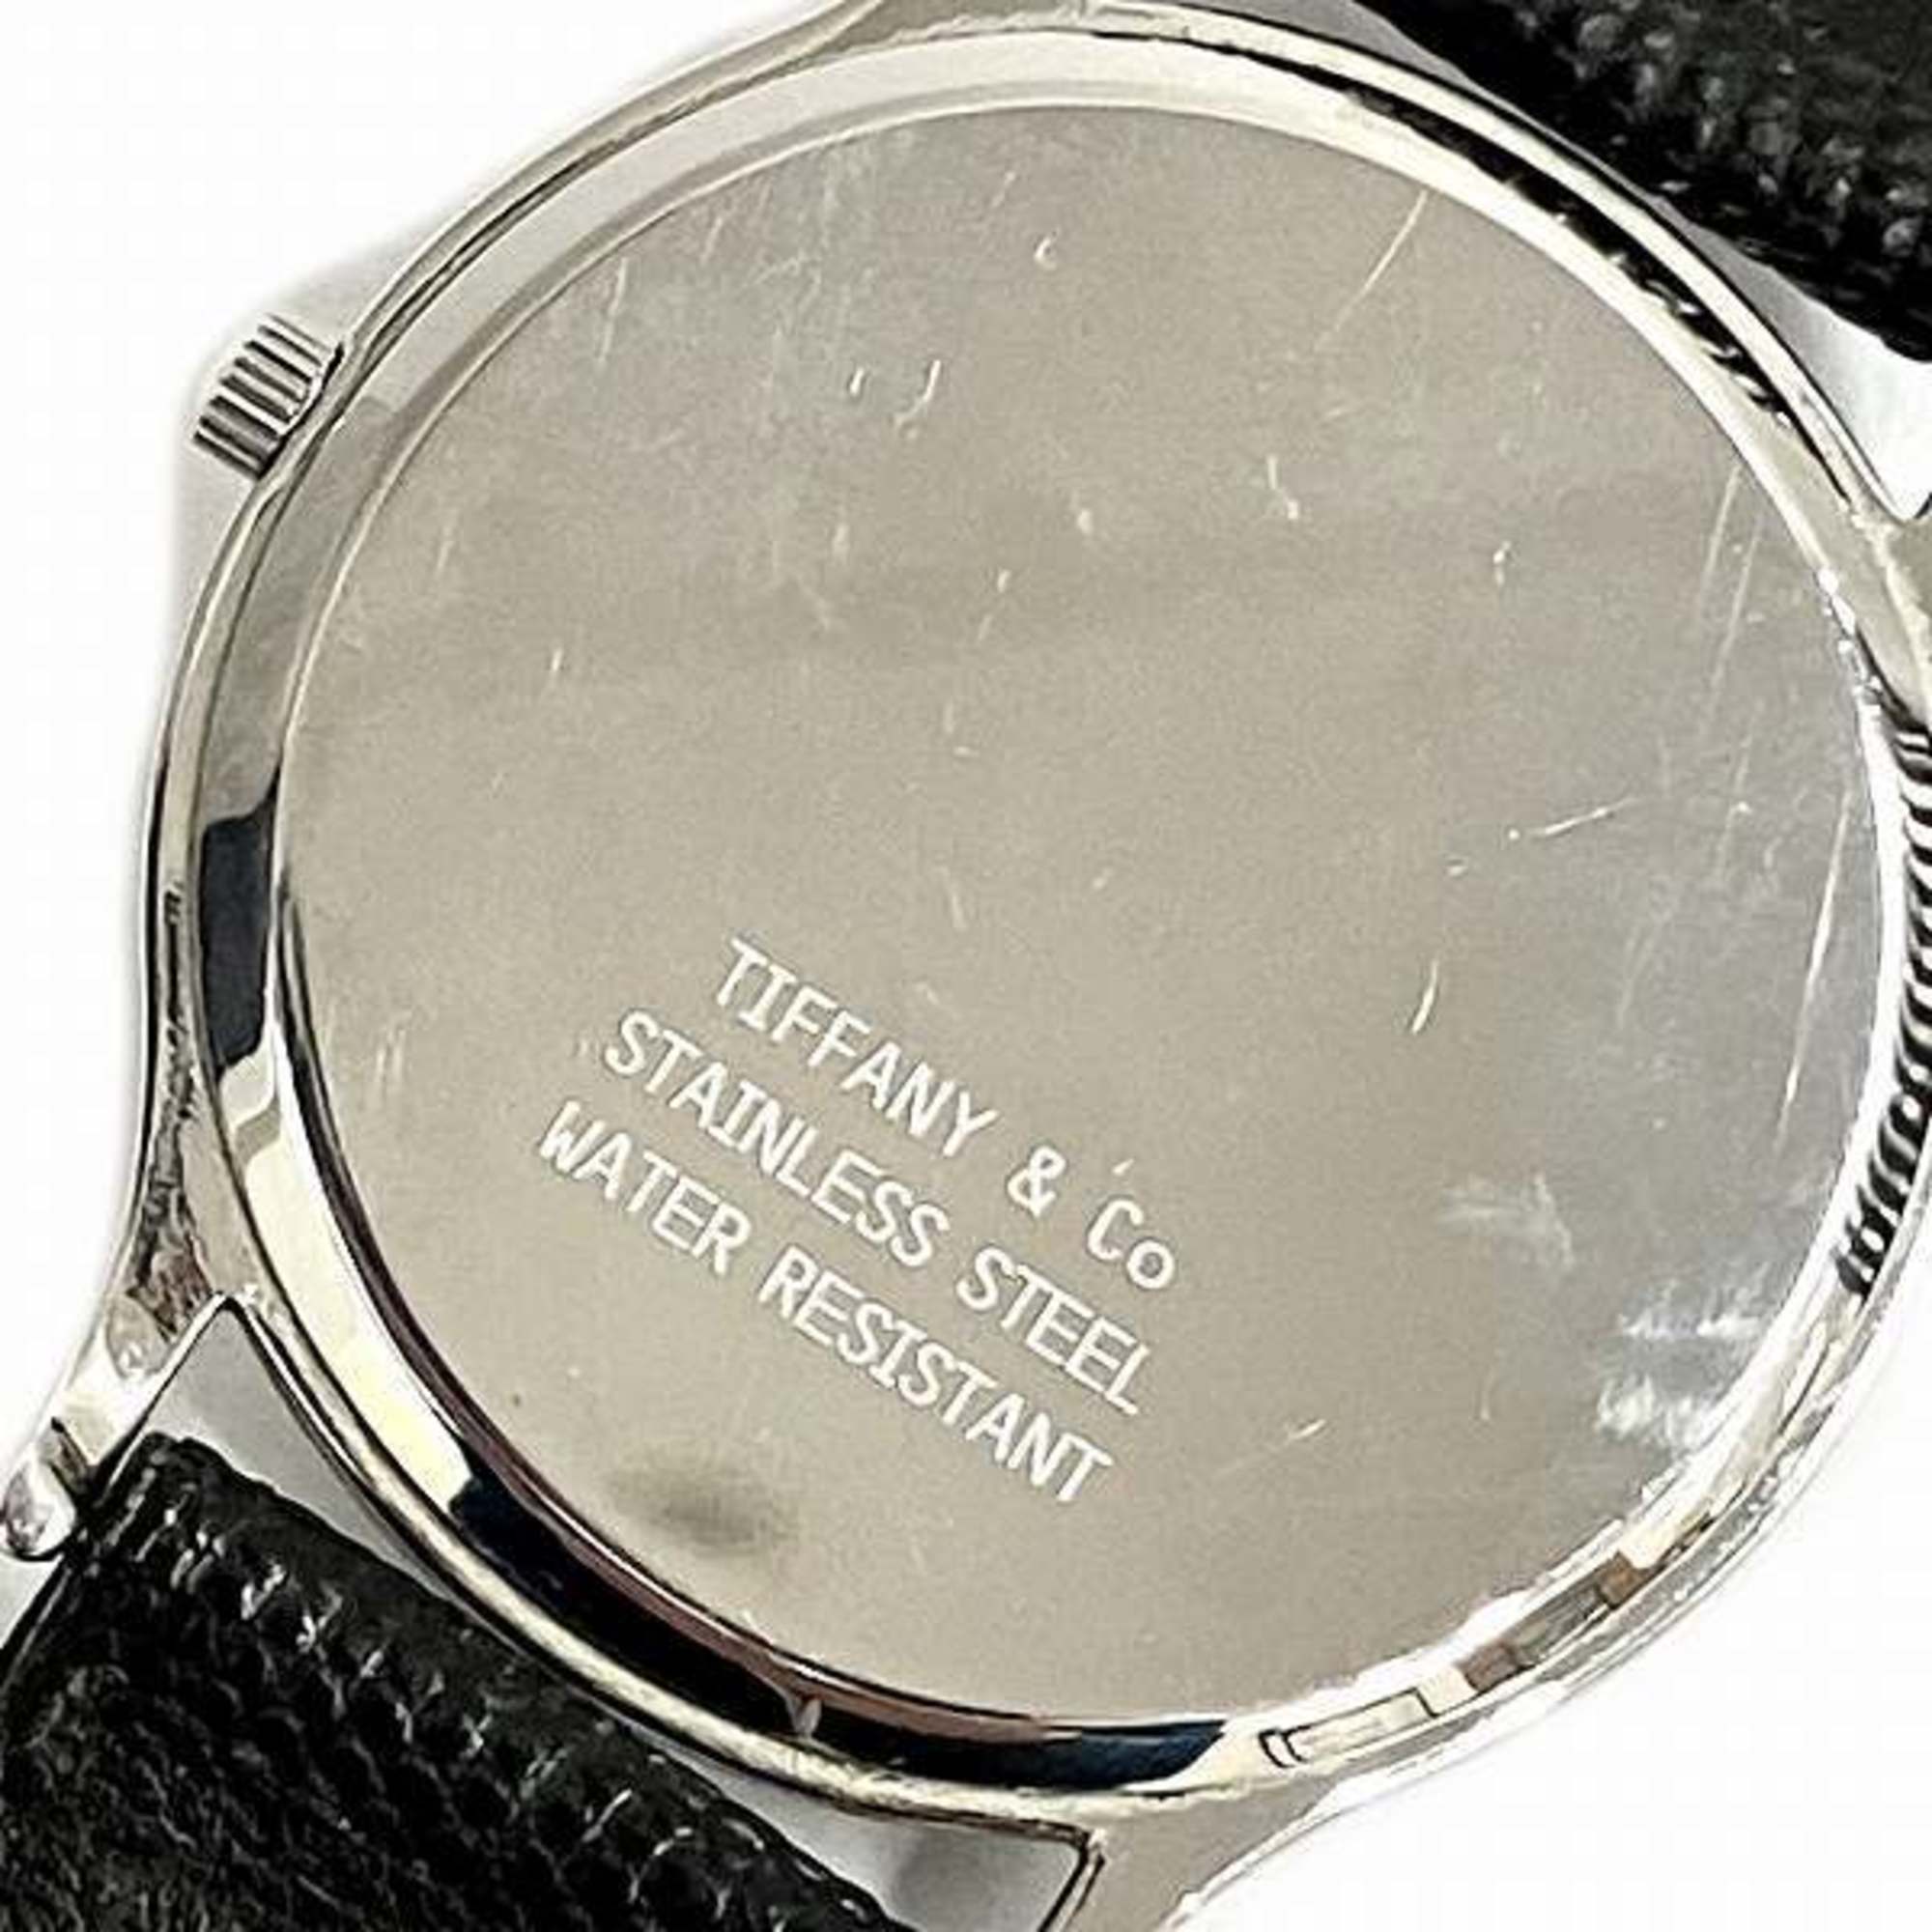 Tiffany Classic Round Quartz White Dial Watch Men's